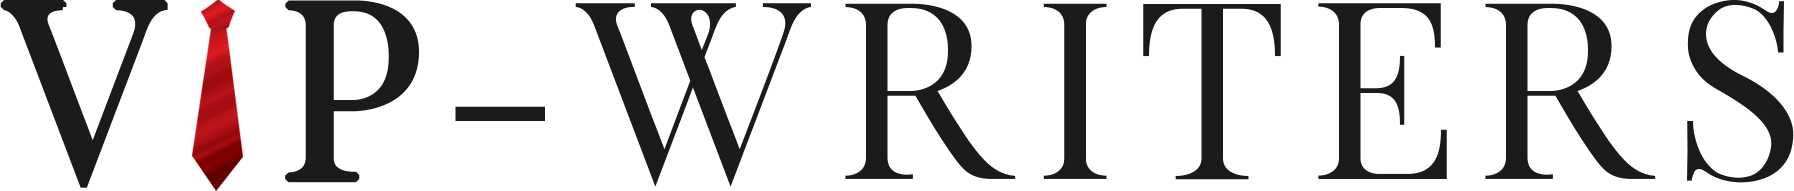 VIP Writers logo